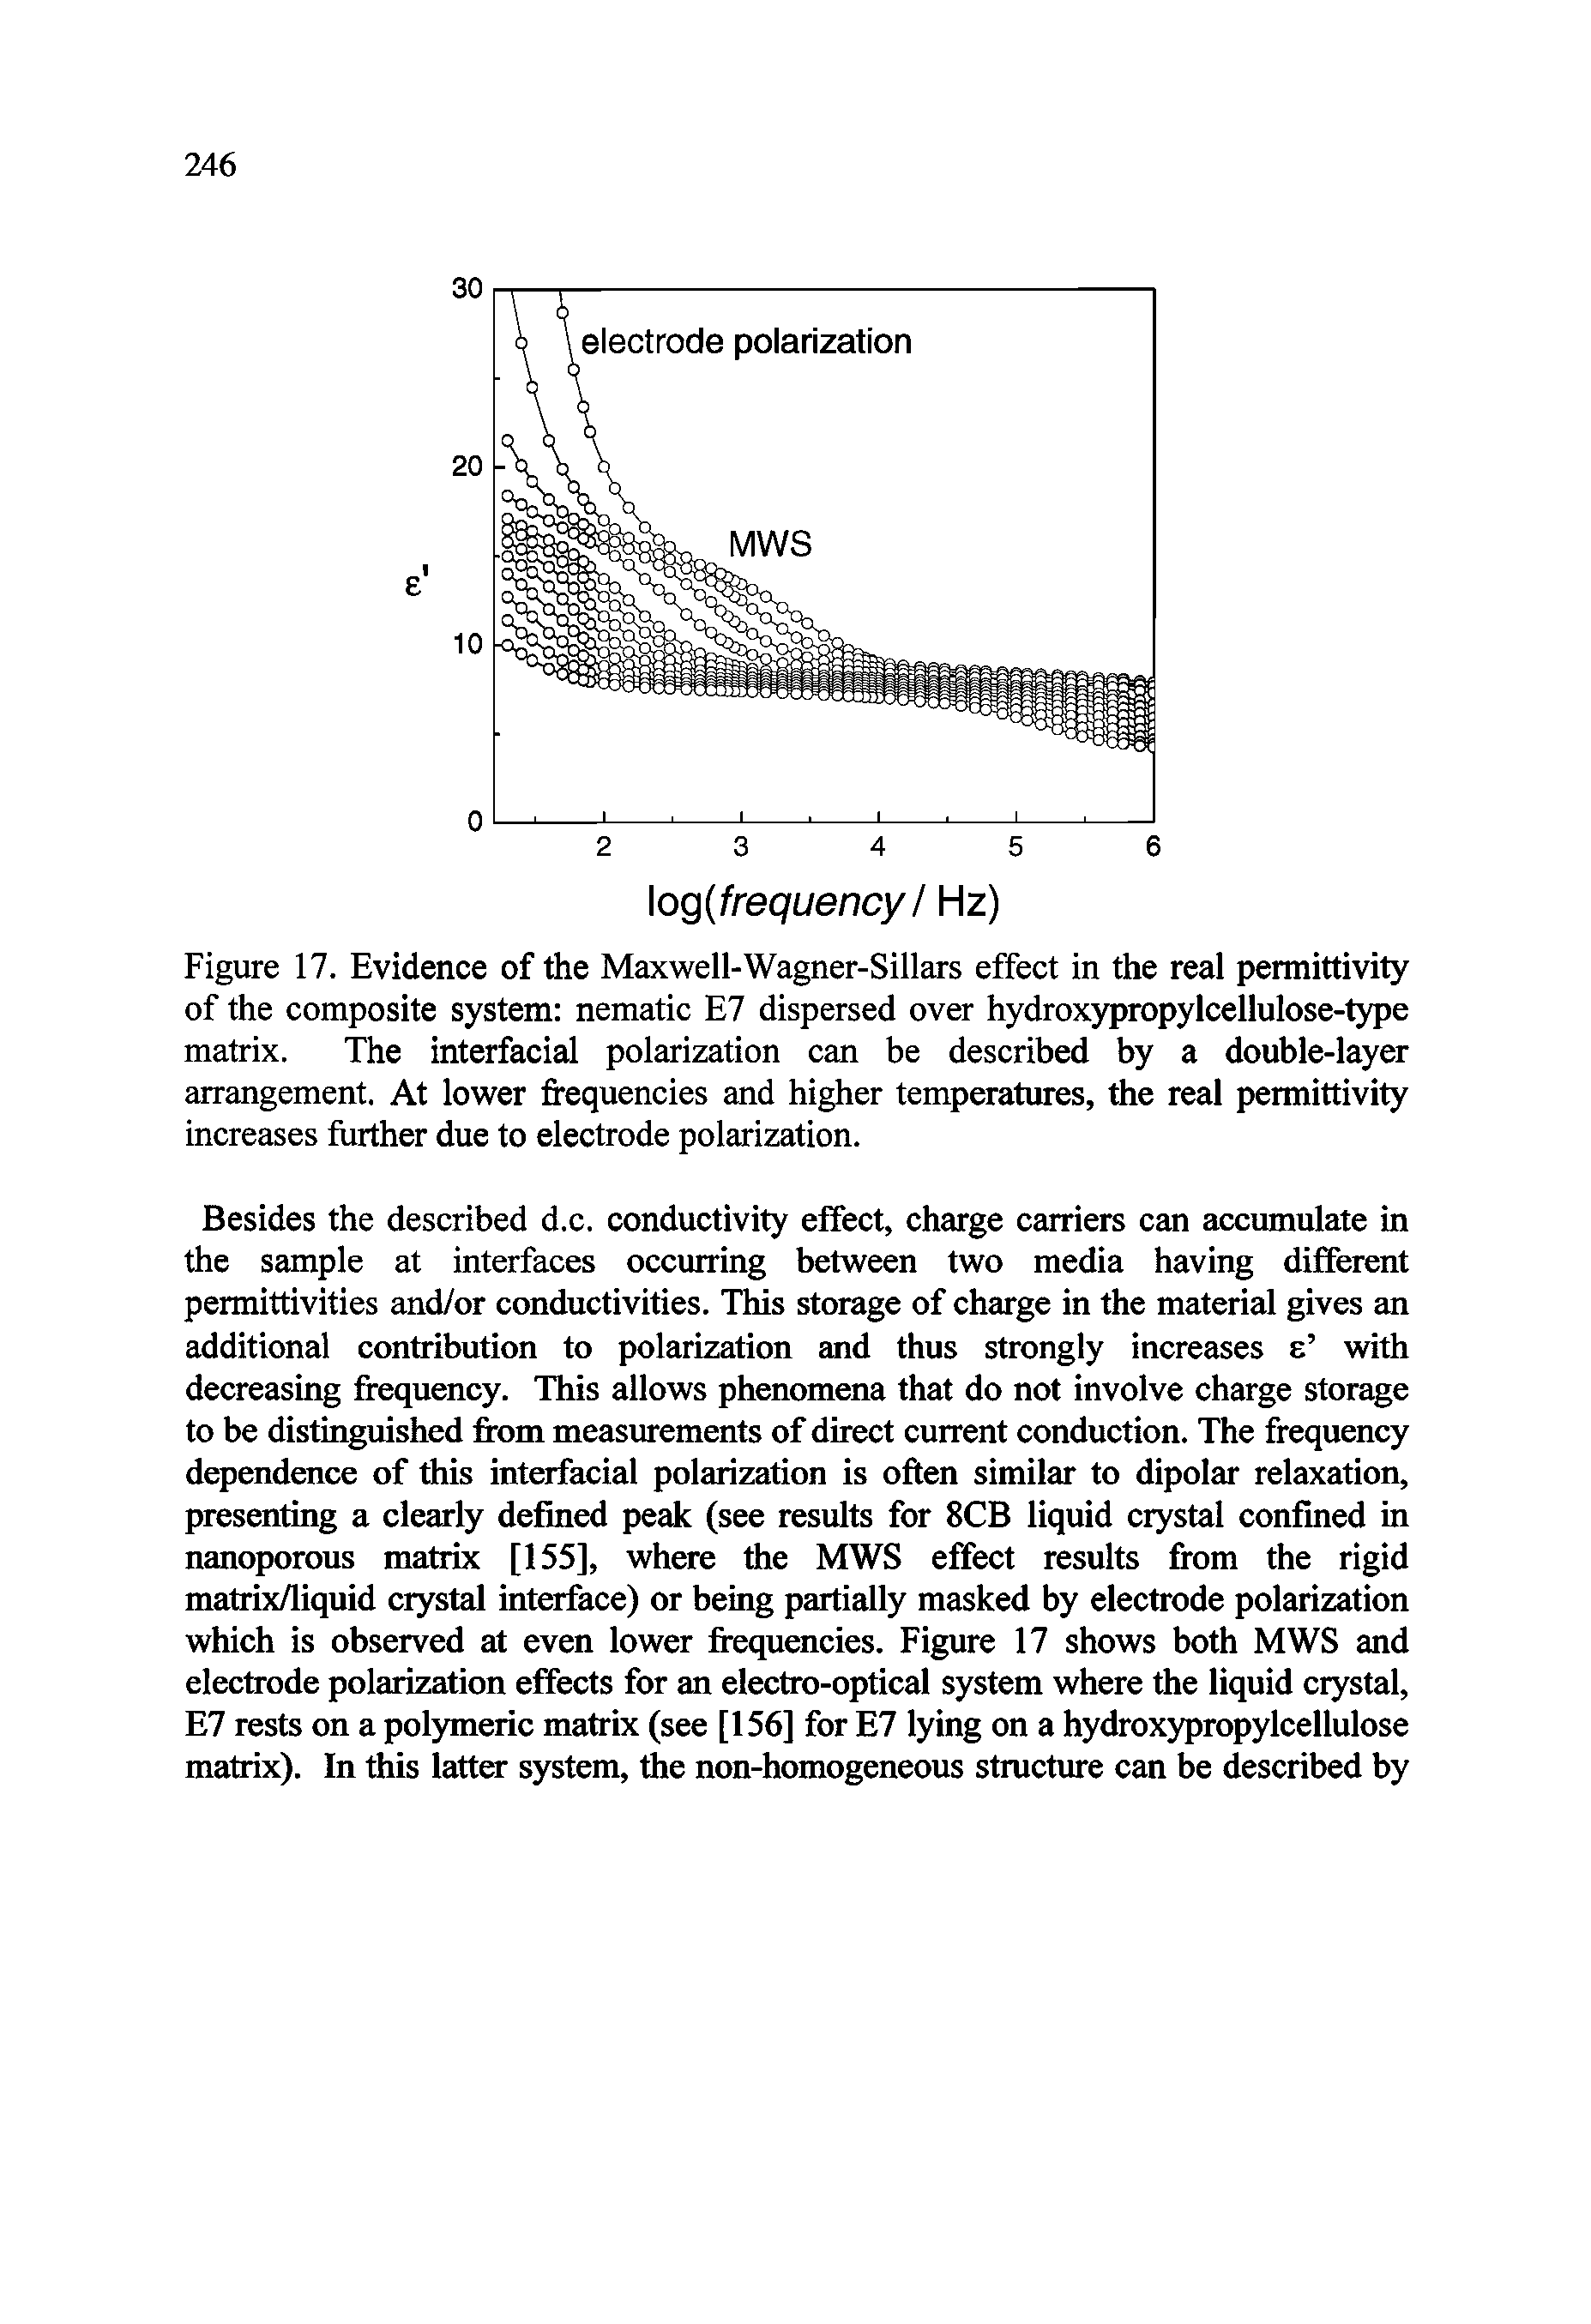 Maxwell-Wagner-Sillars - Big Chemical Encyclopedia